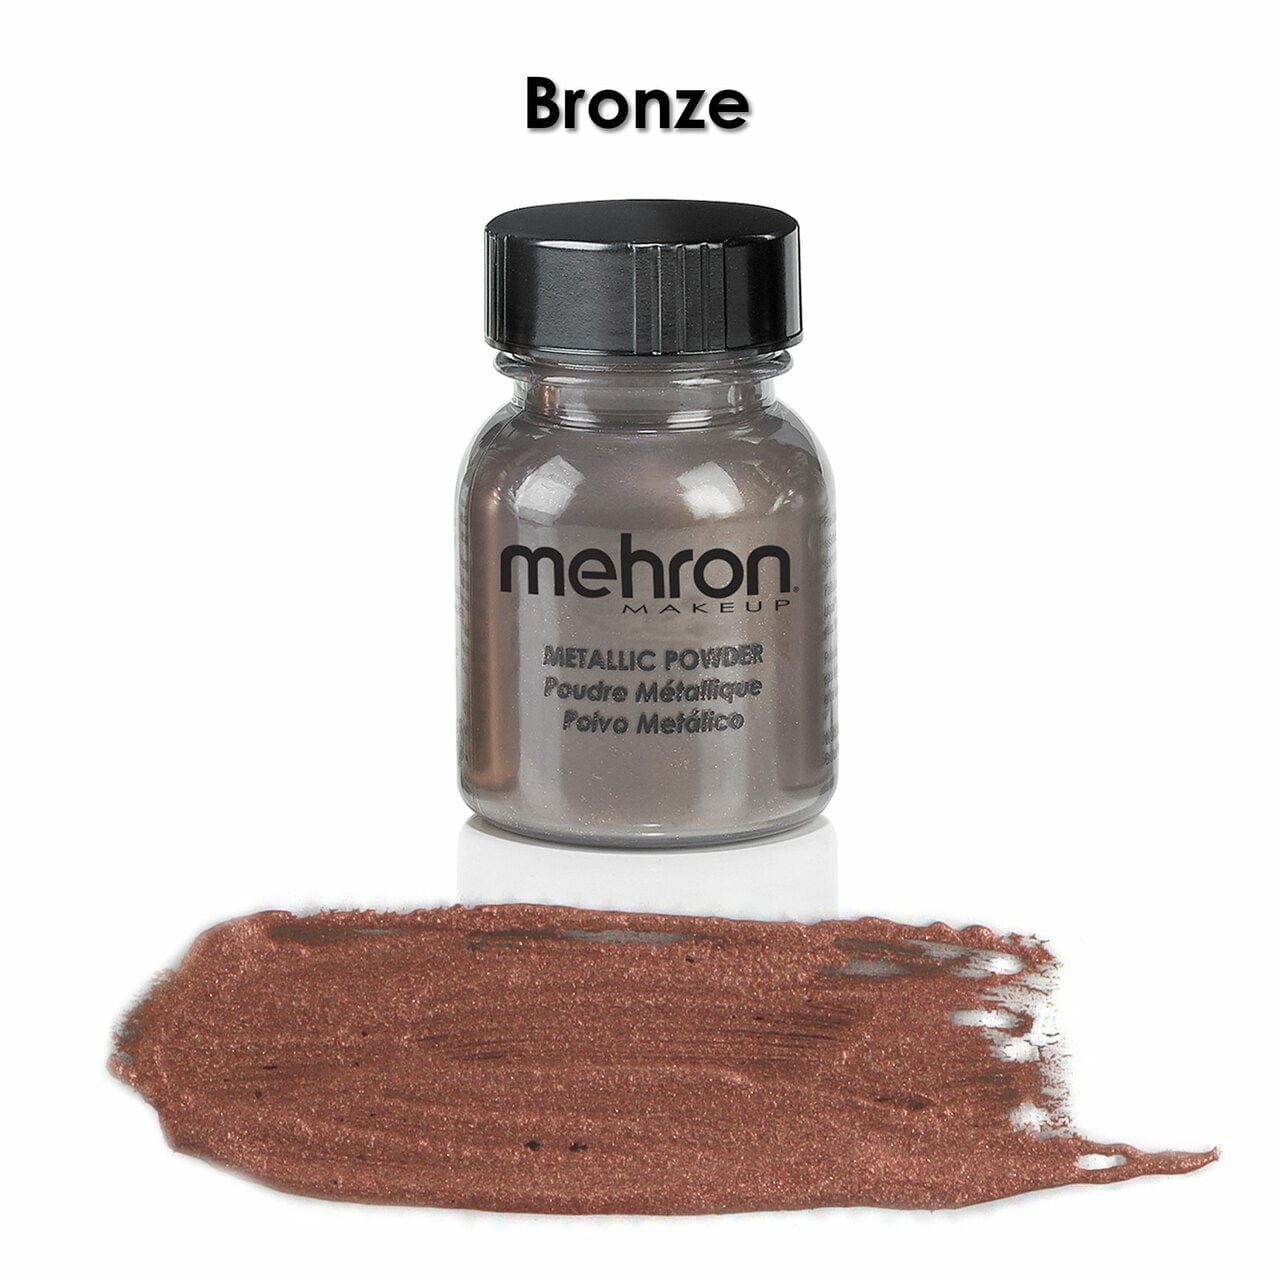 Mehron Metallic Powder - bronze - Mehron